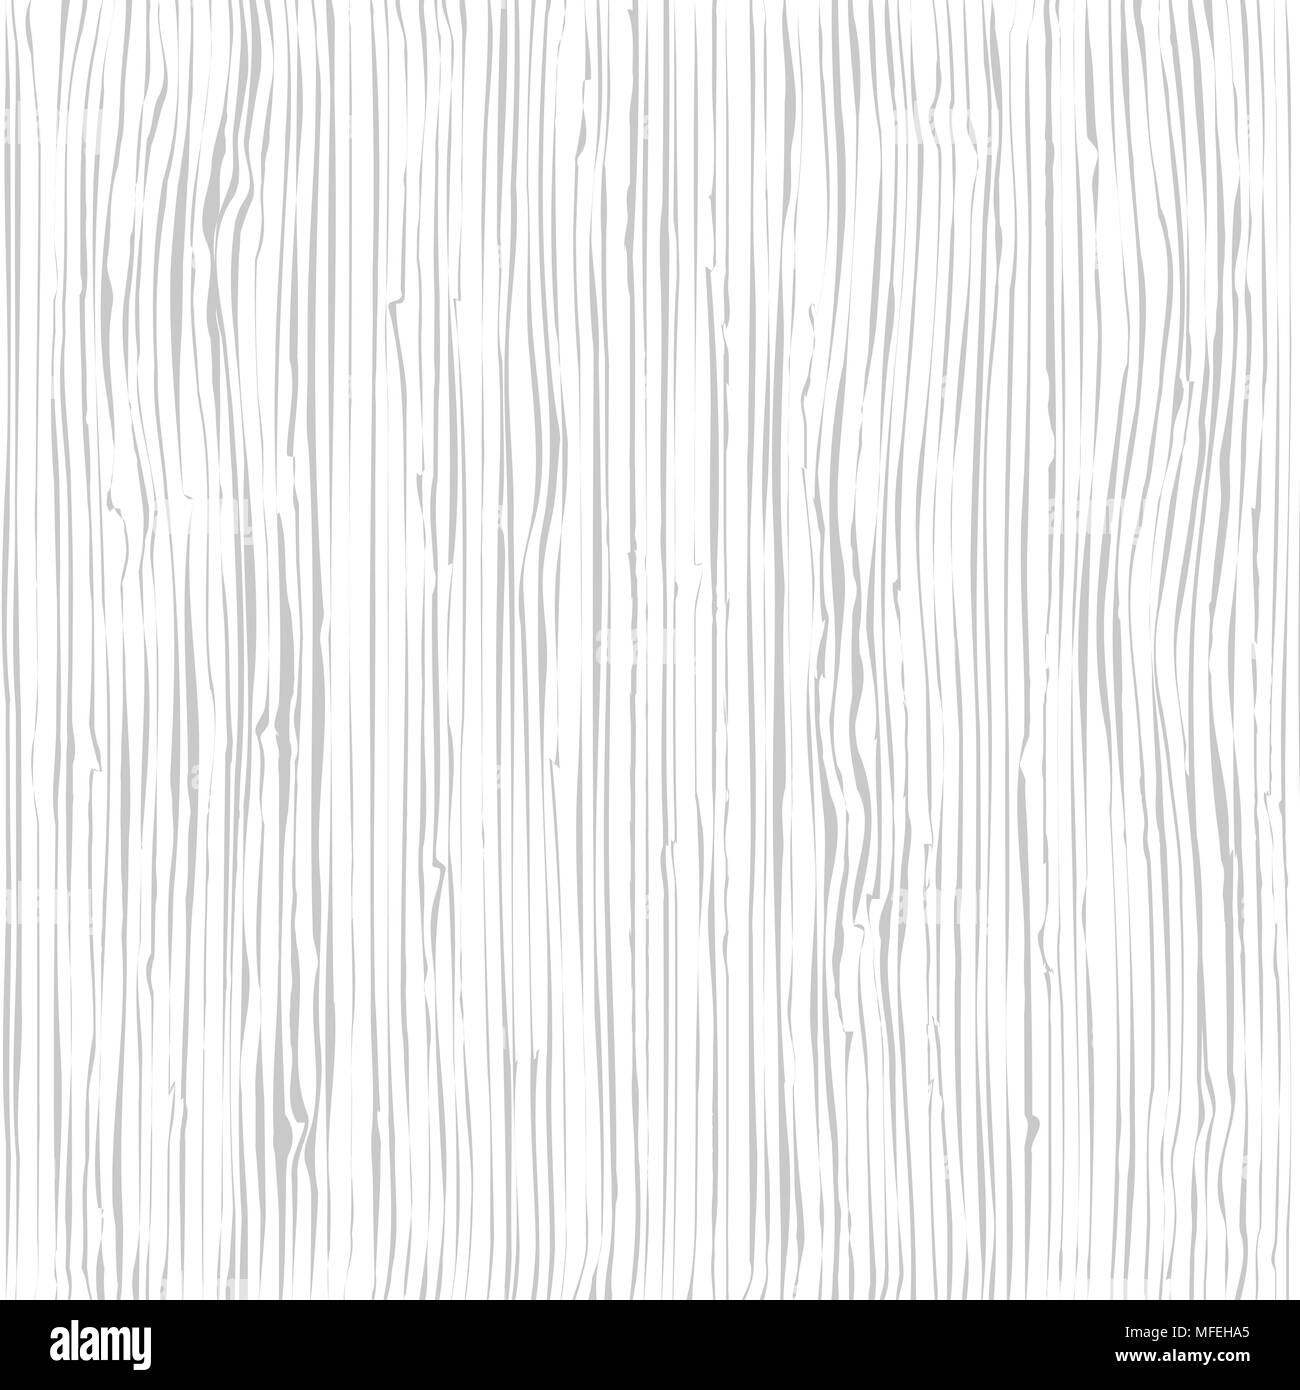 Wooden texture. Wood grain pattern. Fibers structure background, vector illustration Stock Vector